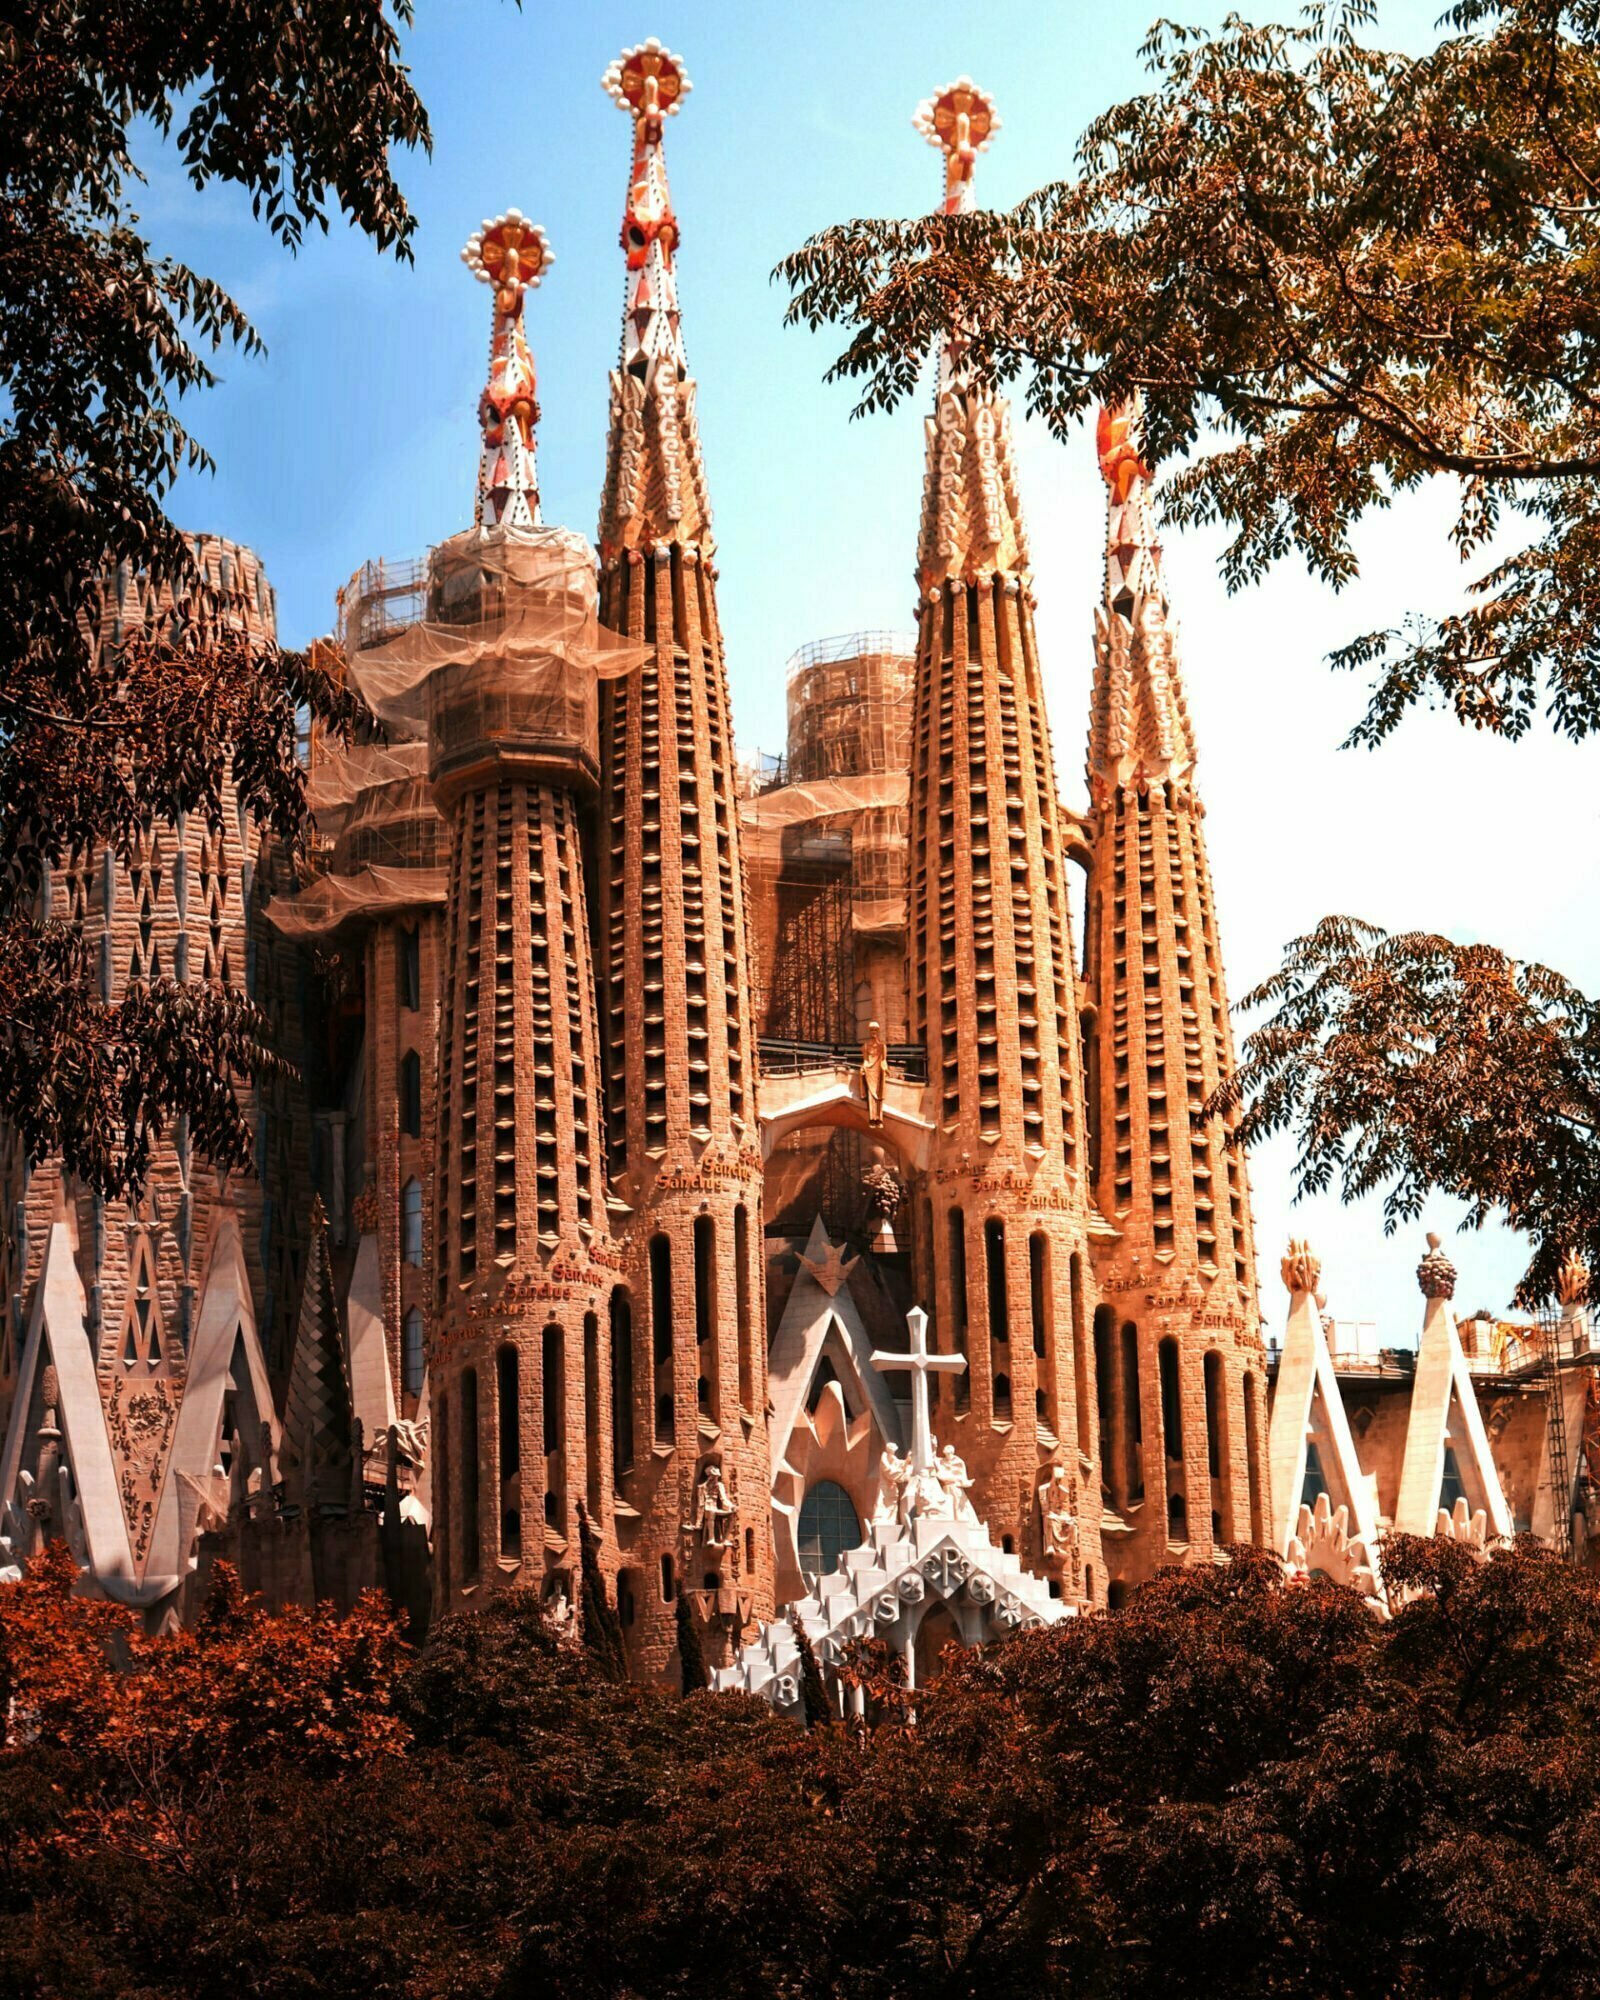 A scene depicting La Sagrada Família is one of Gaudís most famous works in Barcelona